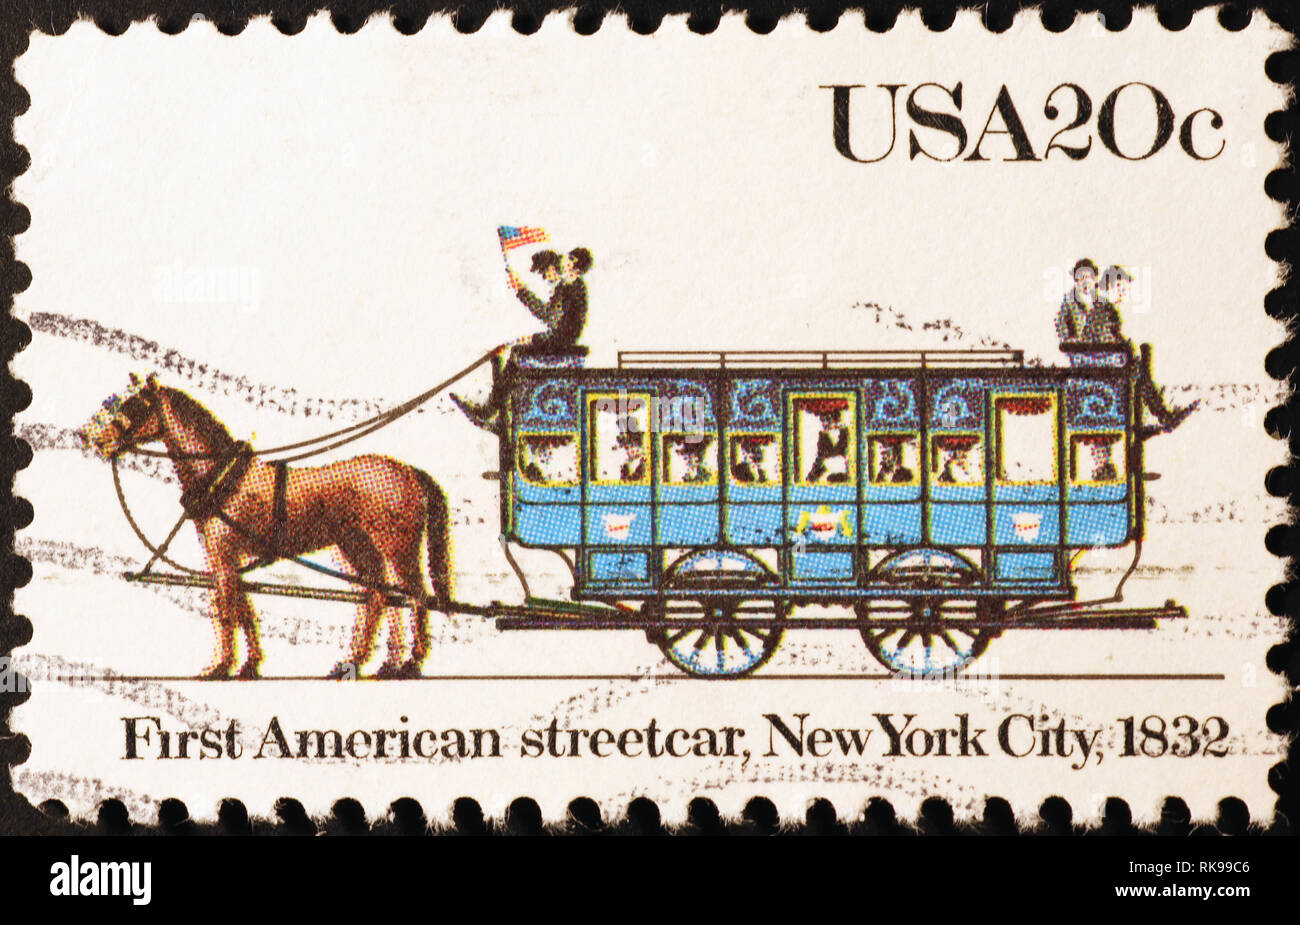 First American streetcar sur timbre américain Banque D'Images